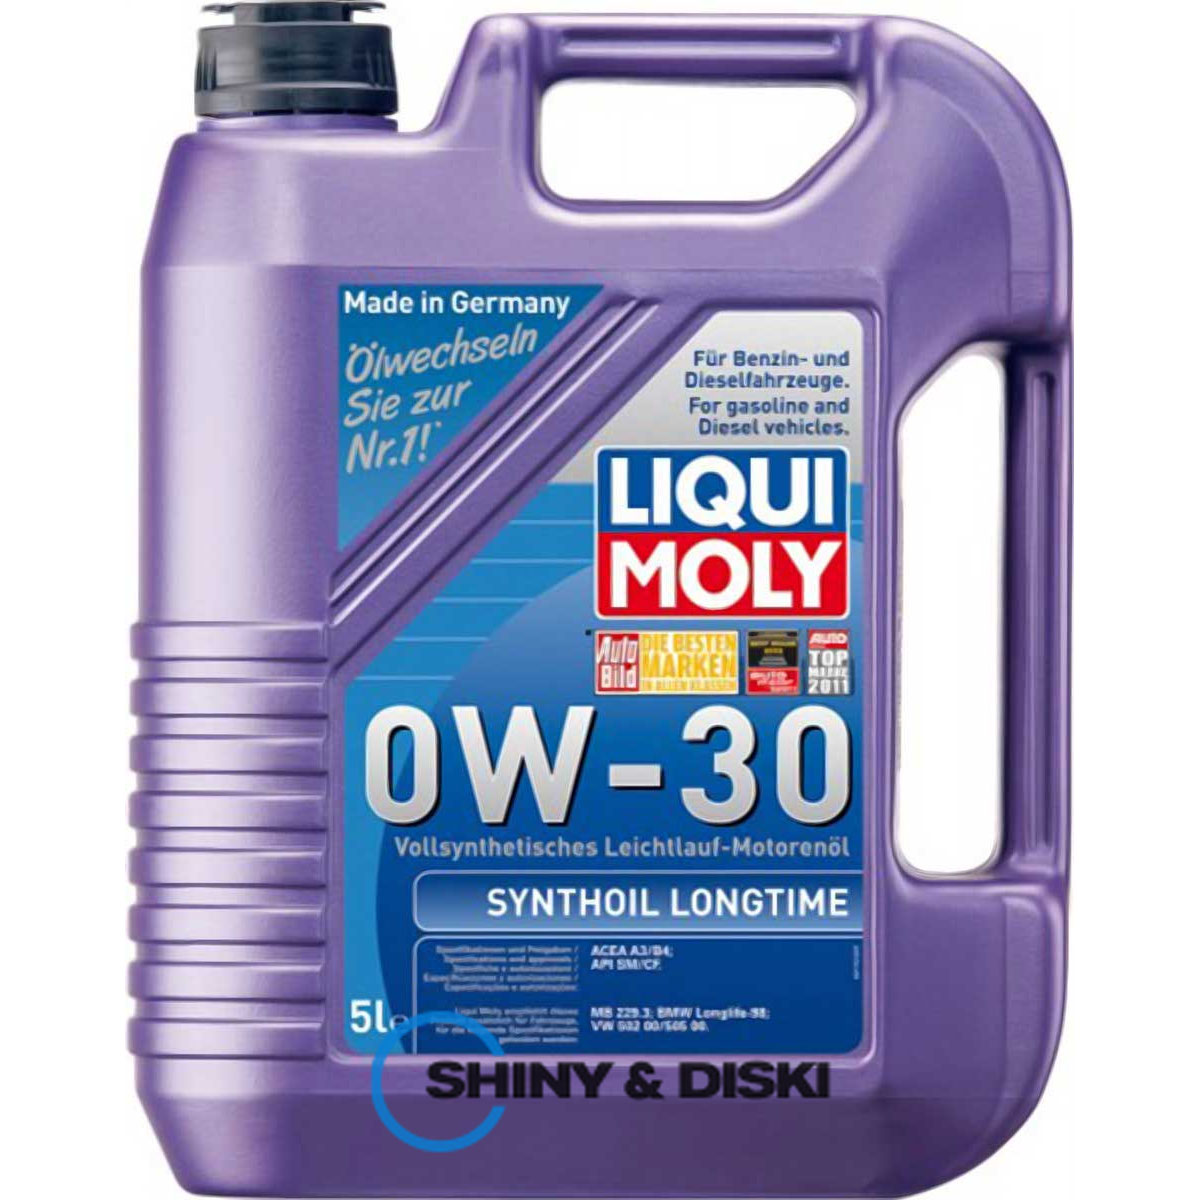 liqui moly synthoil longtime 0w-30 (5л)